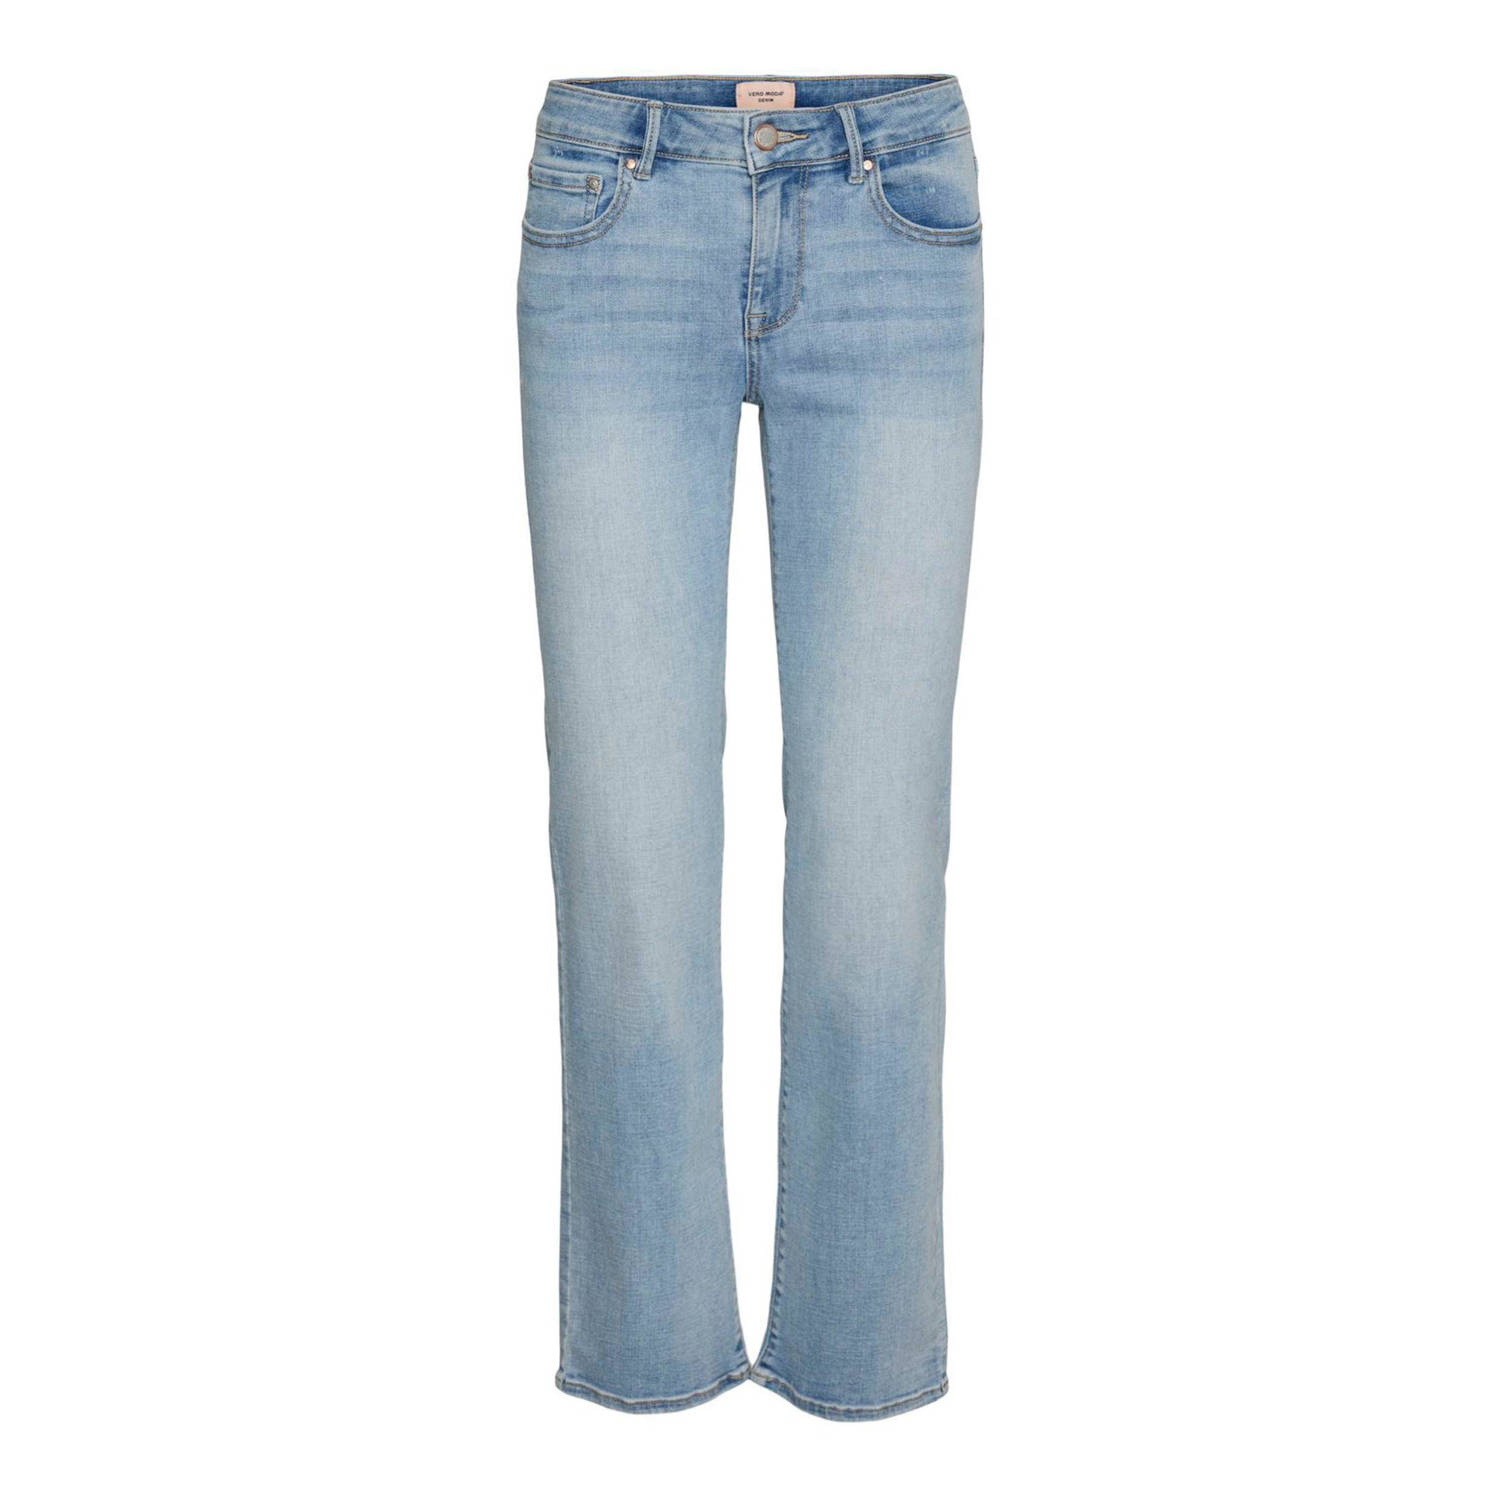 VERO MODA regular jeans VMFLASH light blue denim